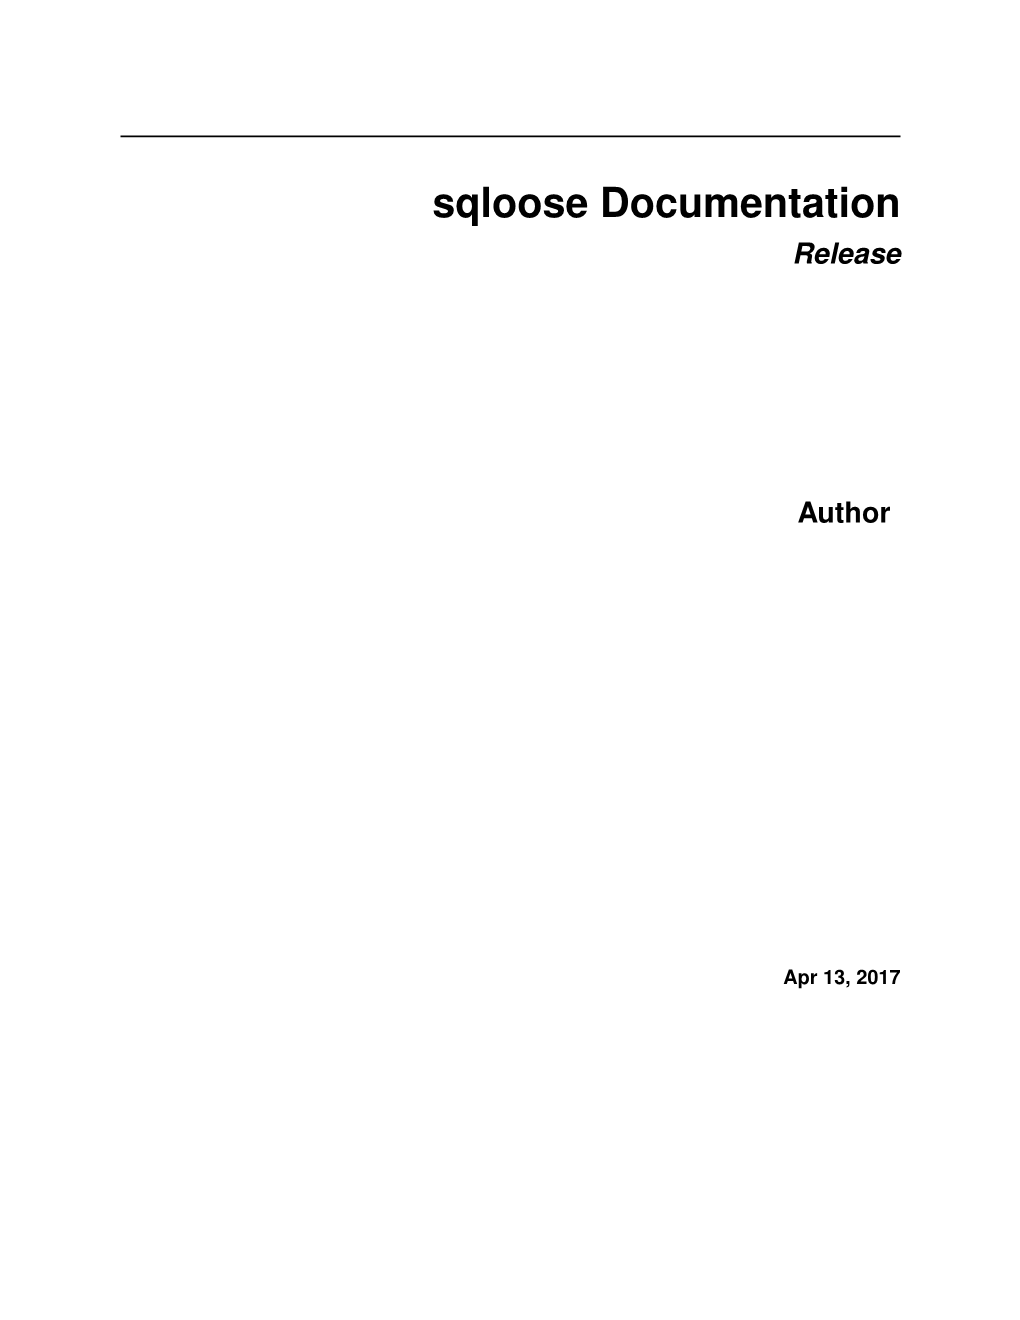 Sqloose Documentation Release